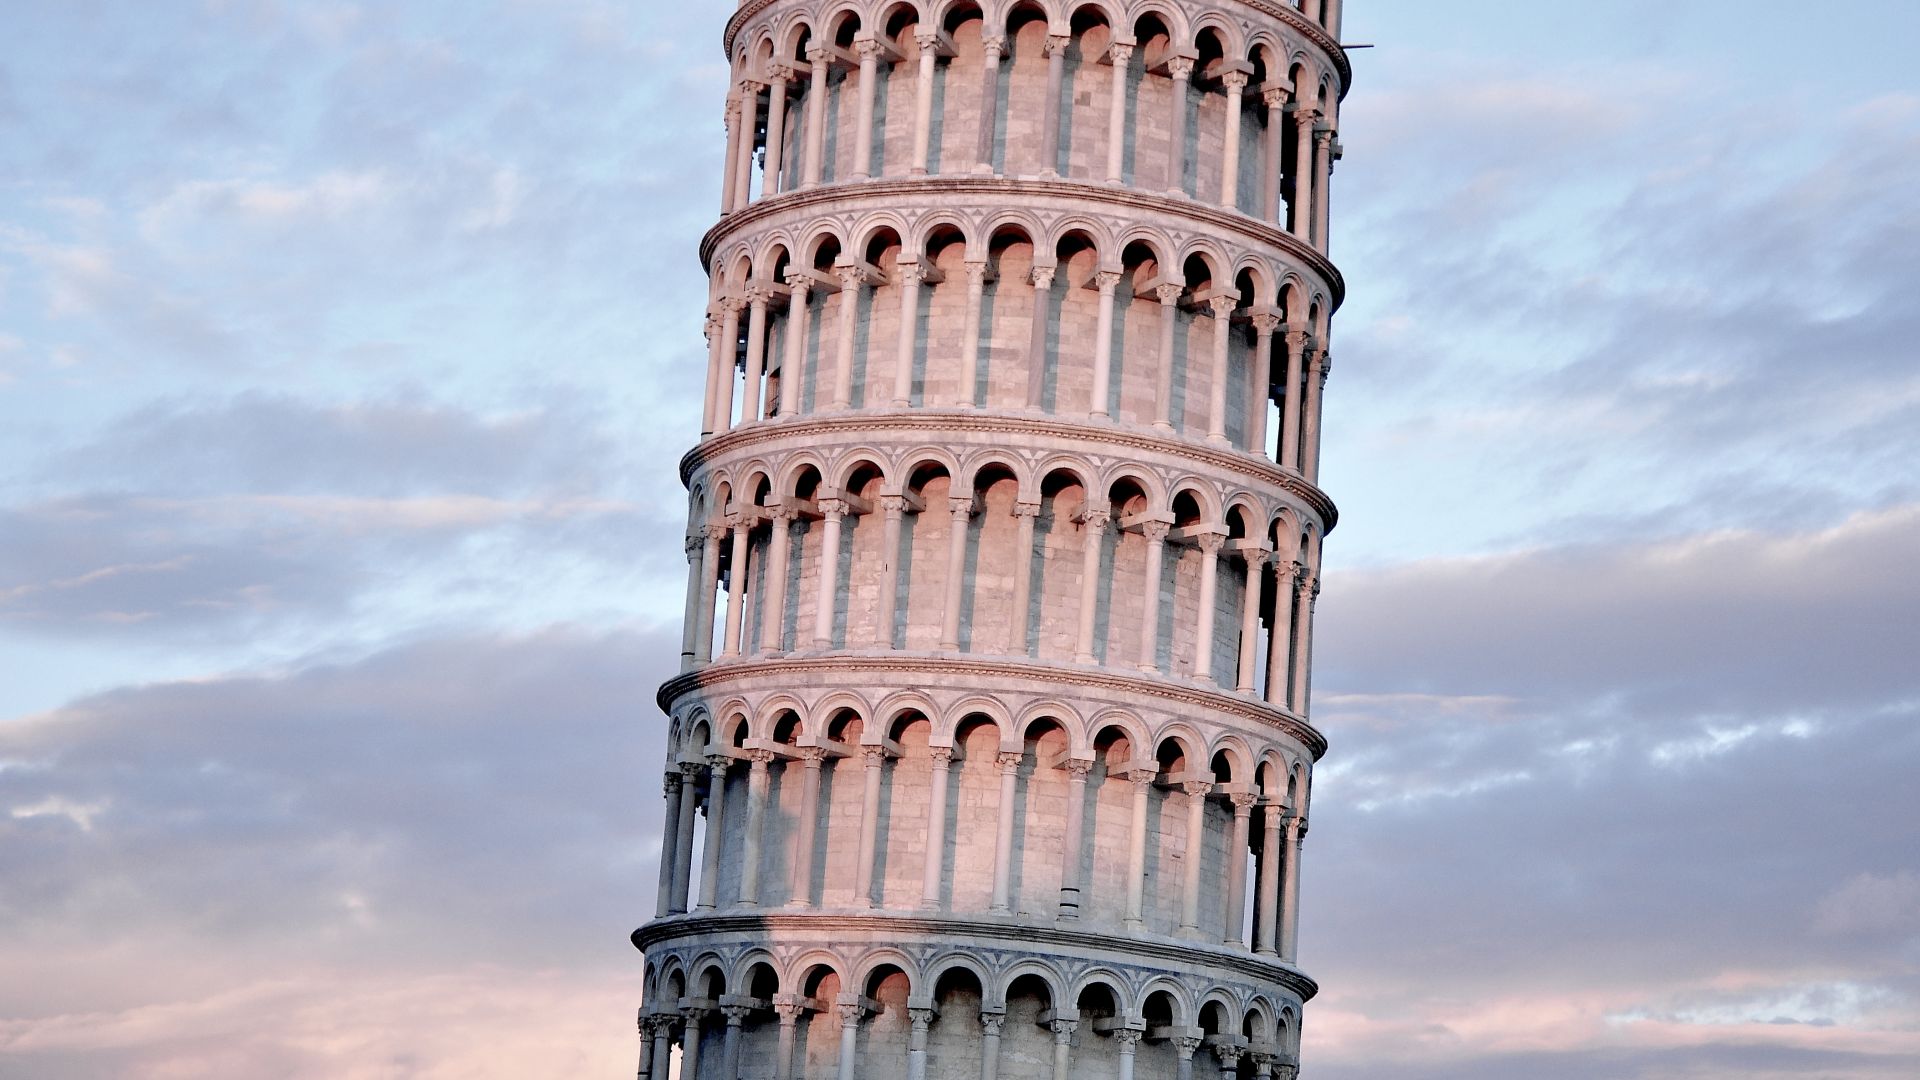 Tower of Pisa, Pisa, Italy, Europe, travel, tourism, Leaning Tower of Pisa (horizontal)